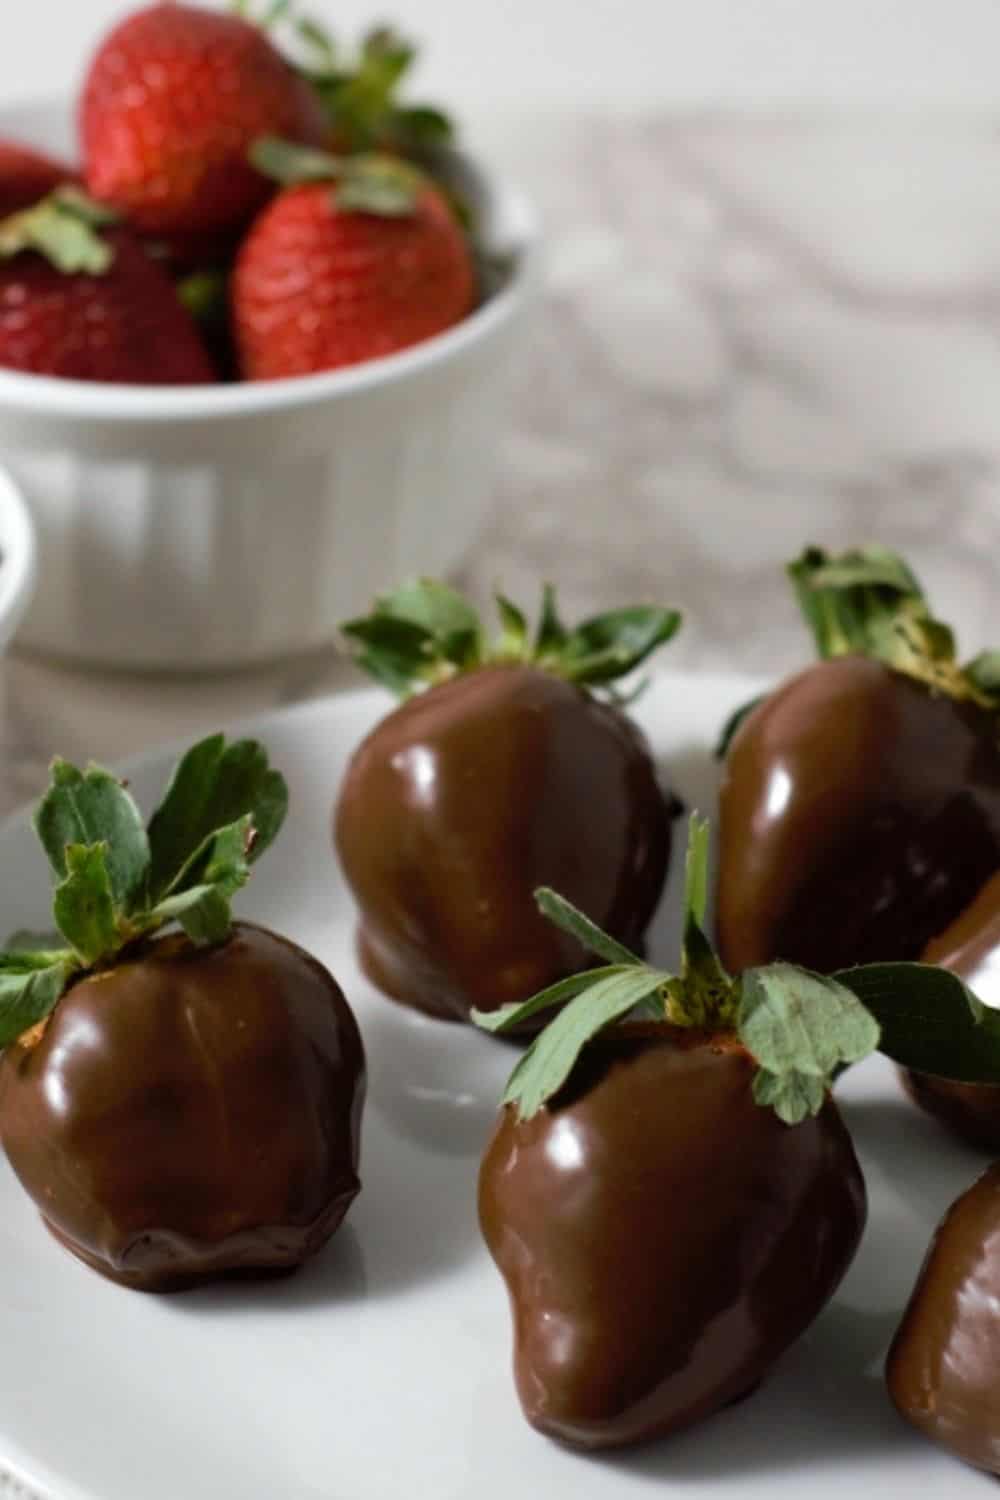 https://zonacooks.com/wp-content/uploads/2018/01/Chocolate-Covered-Strawberries-Small-Batch-Recipe-22.jpg